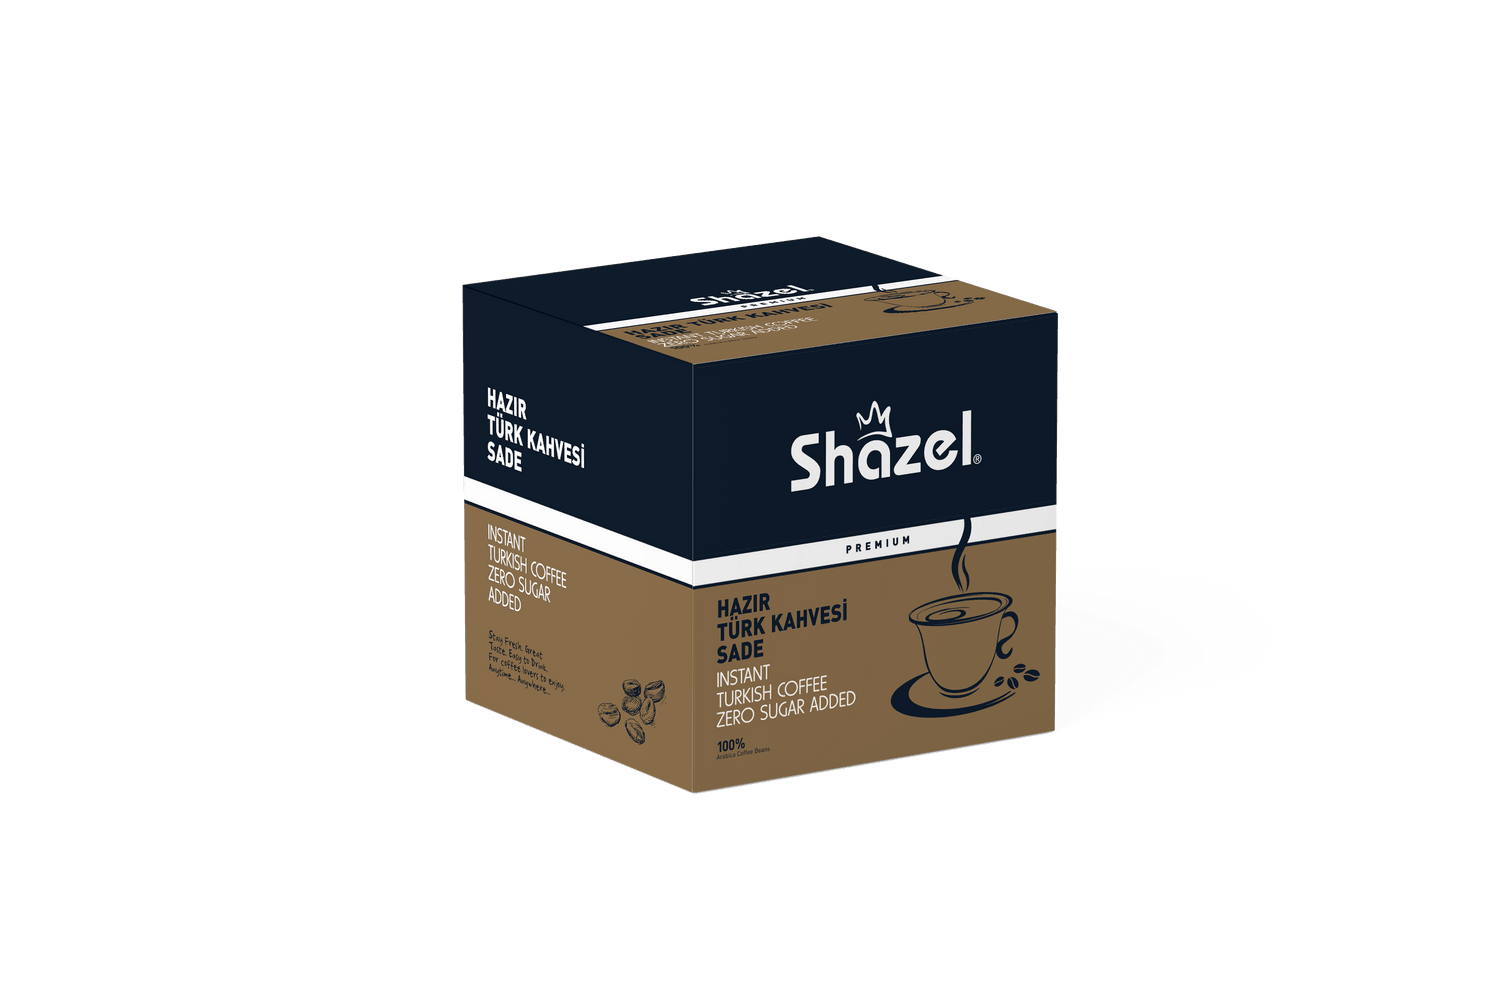 Shazel Instant Turkish Coffee Plain 7g 12 pieces 12 boxes